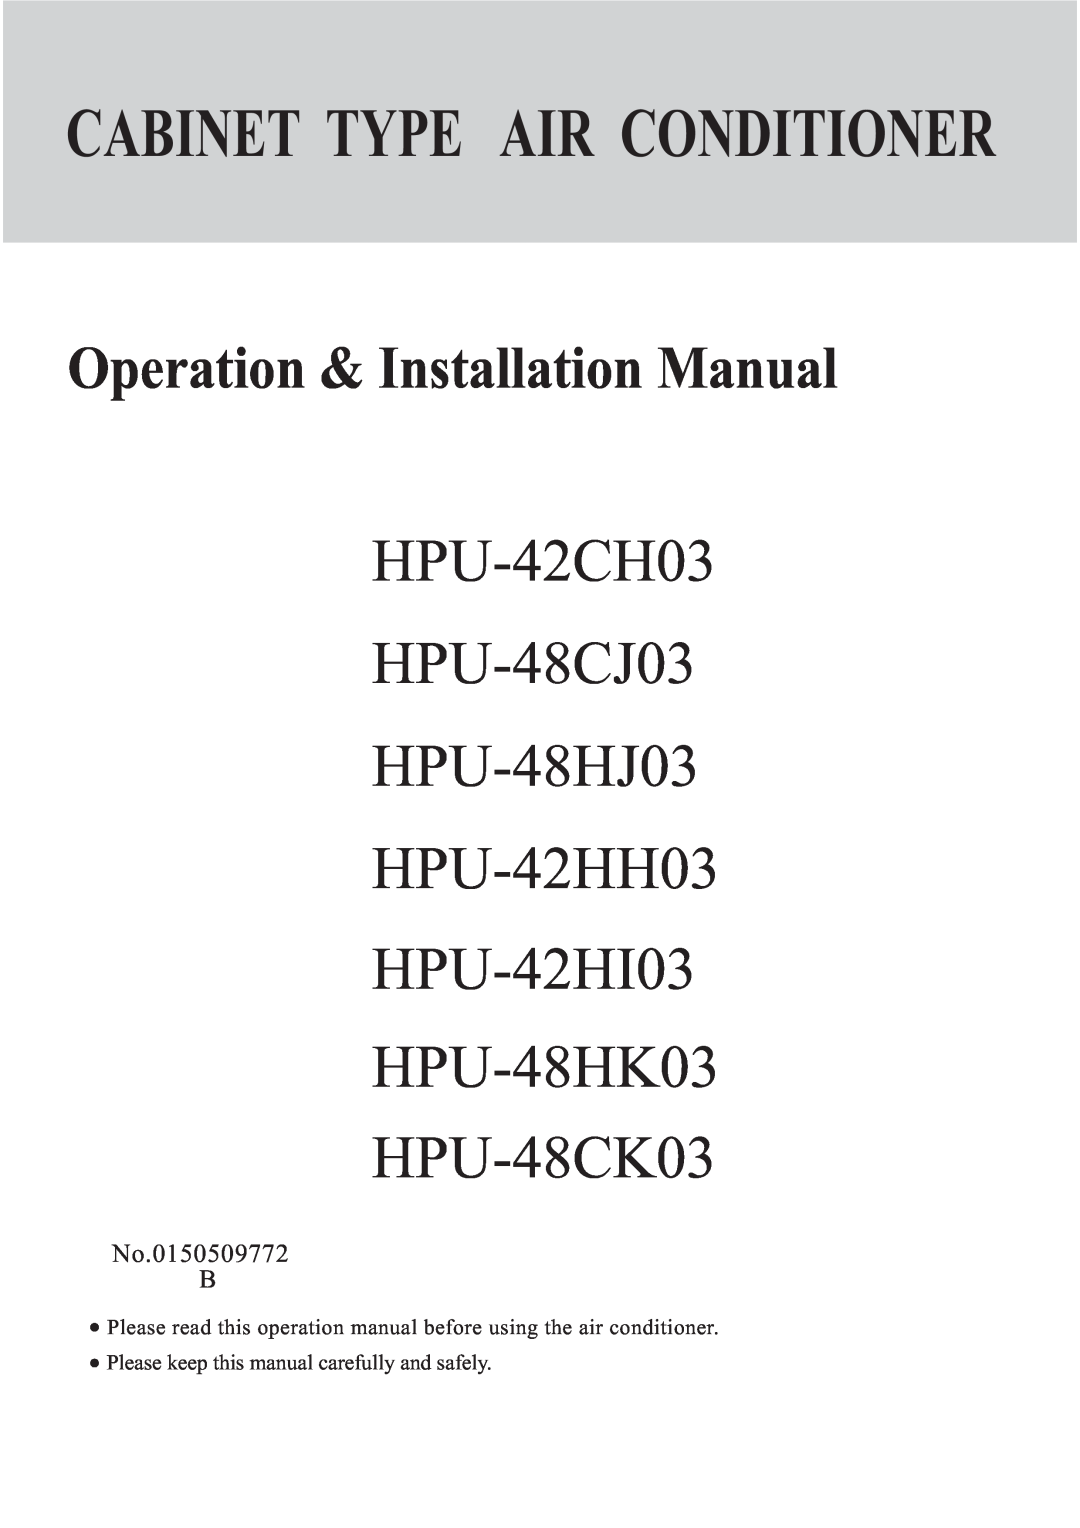 Haier HPU-42HI03, HPU-42CH03, HPU-48HK03 operation manual Cabinet Type Air Conditioner, Operation & Installation Manual 